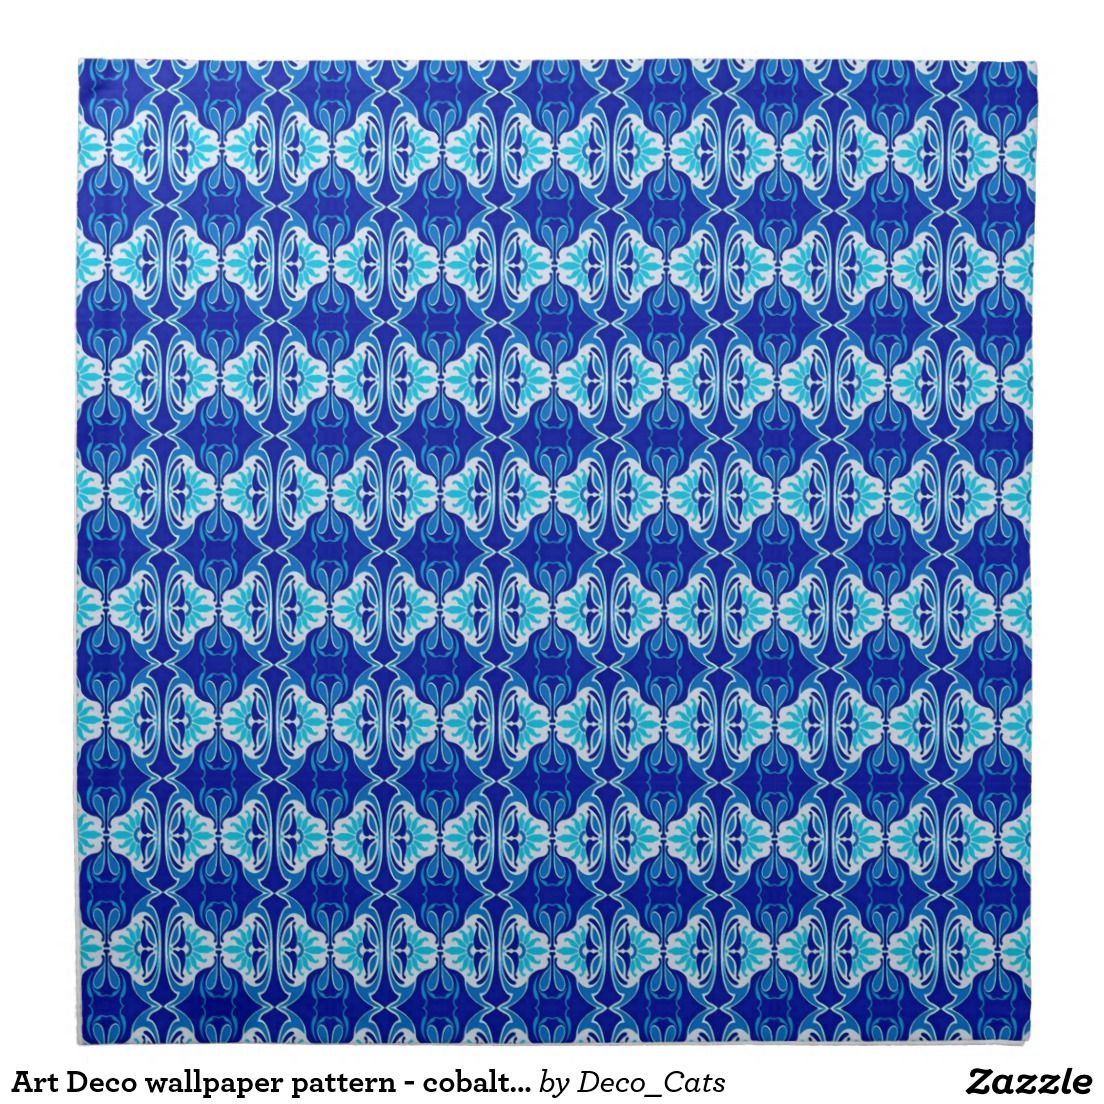 Art Deco wallpaper pattern - cobalt blue and white Printed Napkin